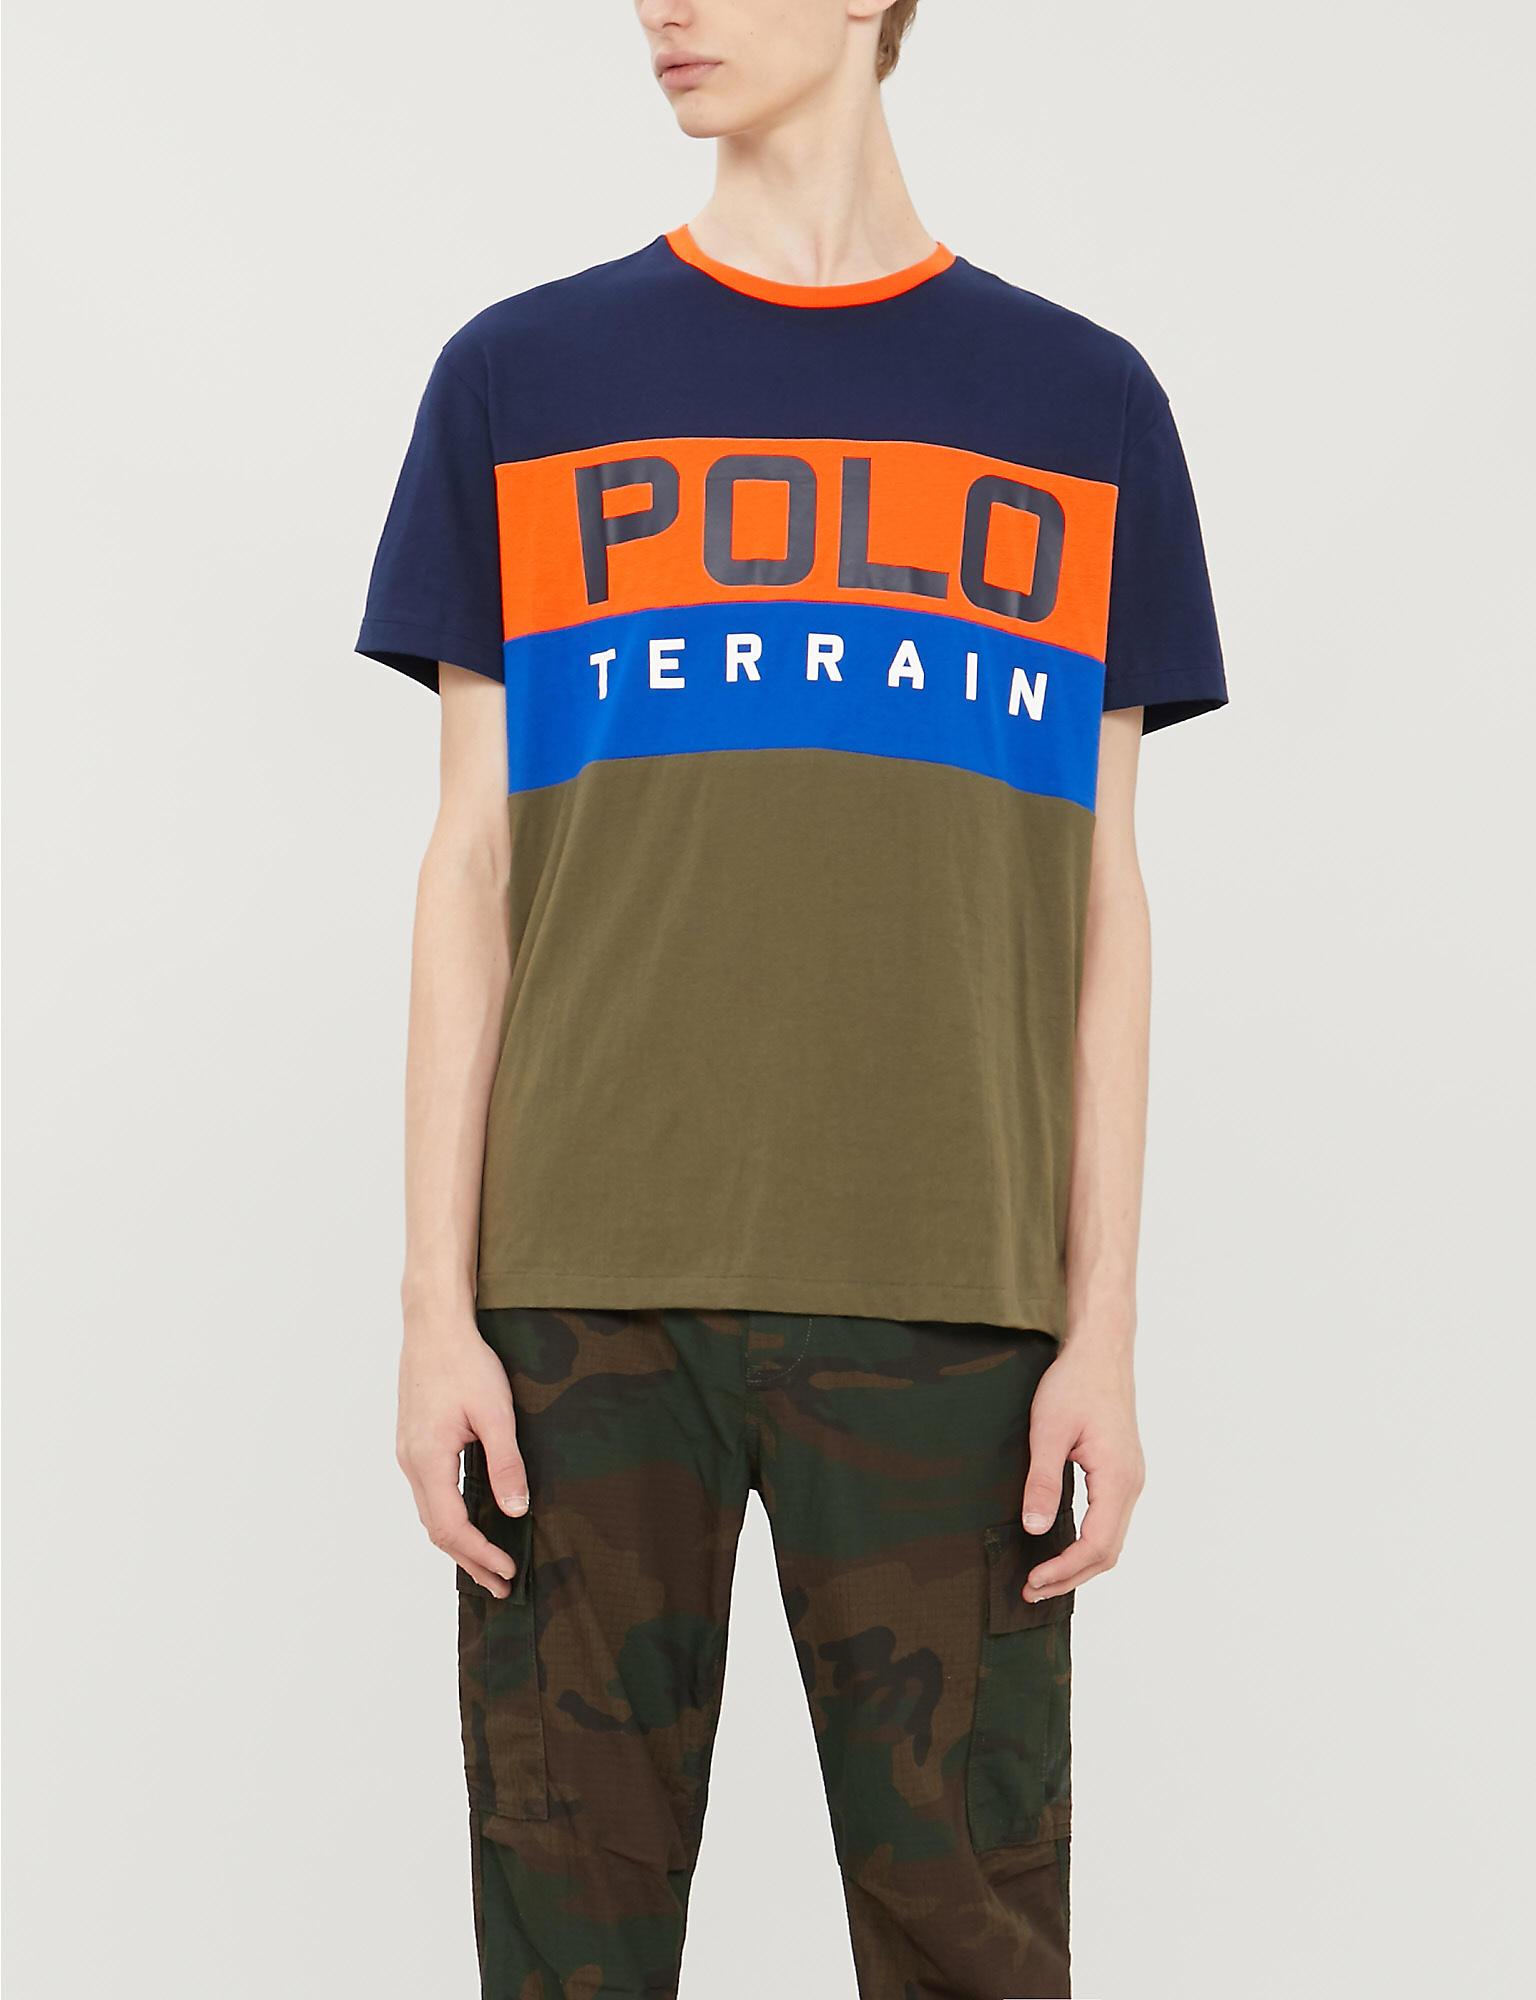 Polo Terrain Shirt Austria, SAVE 32% - fearthemecca.com